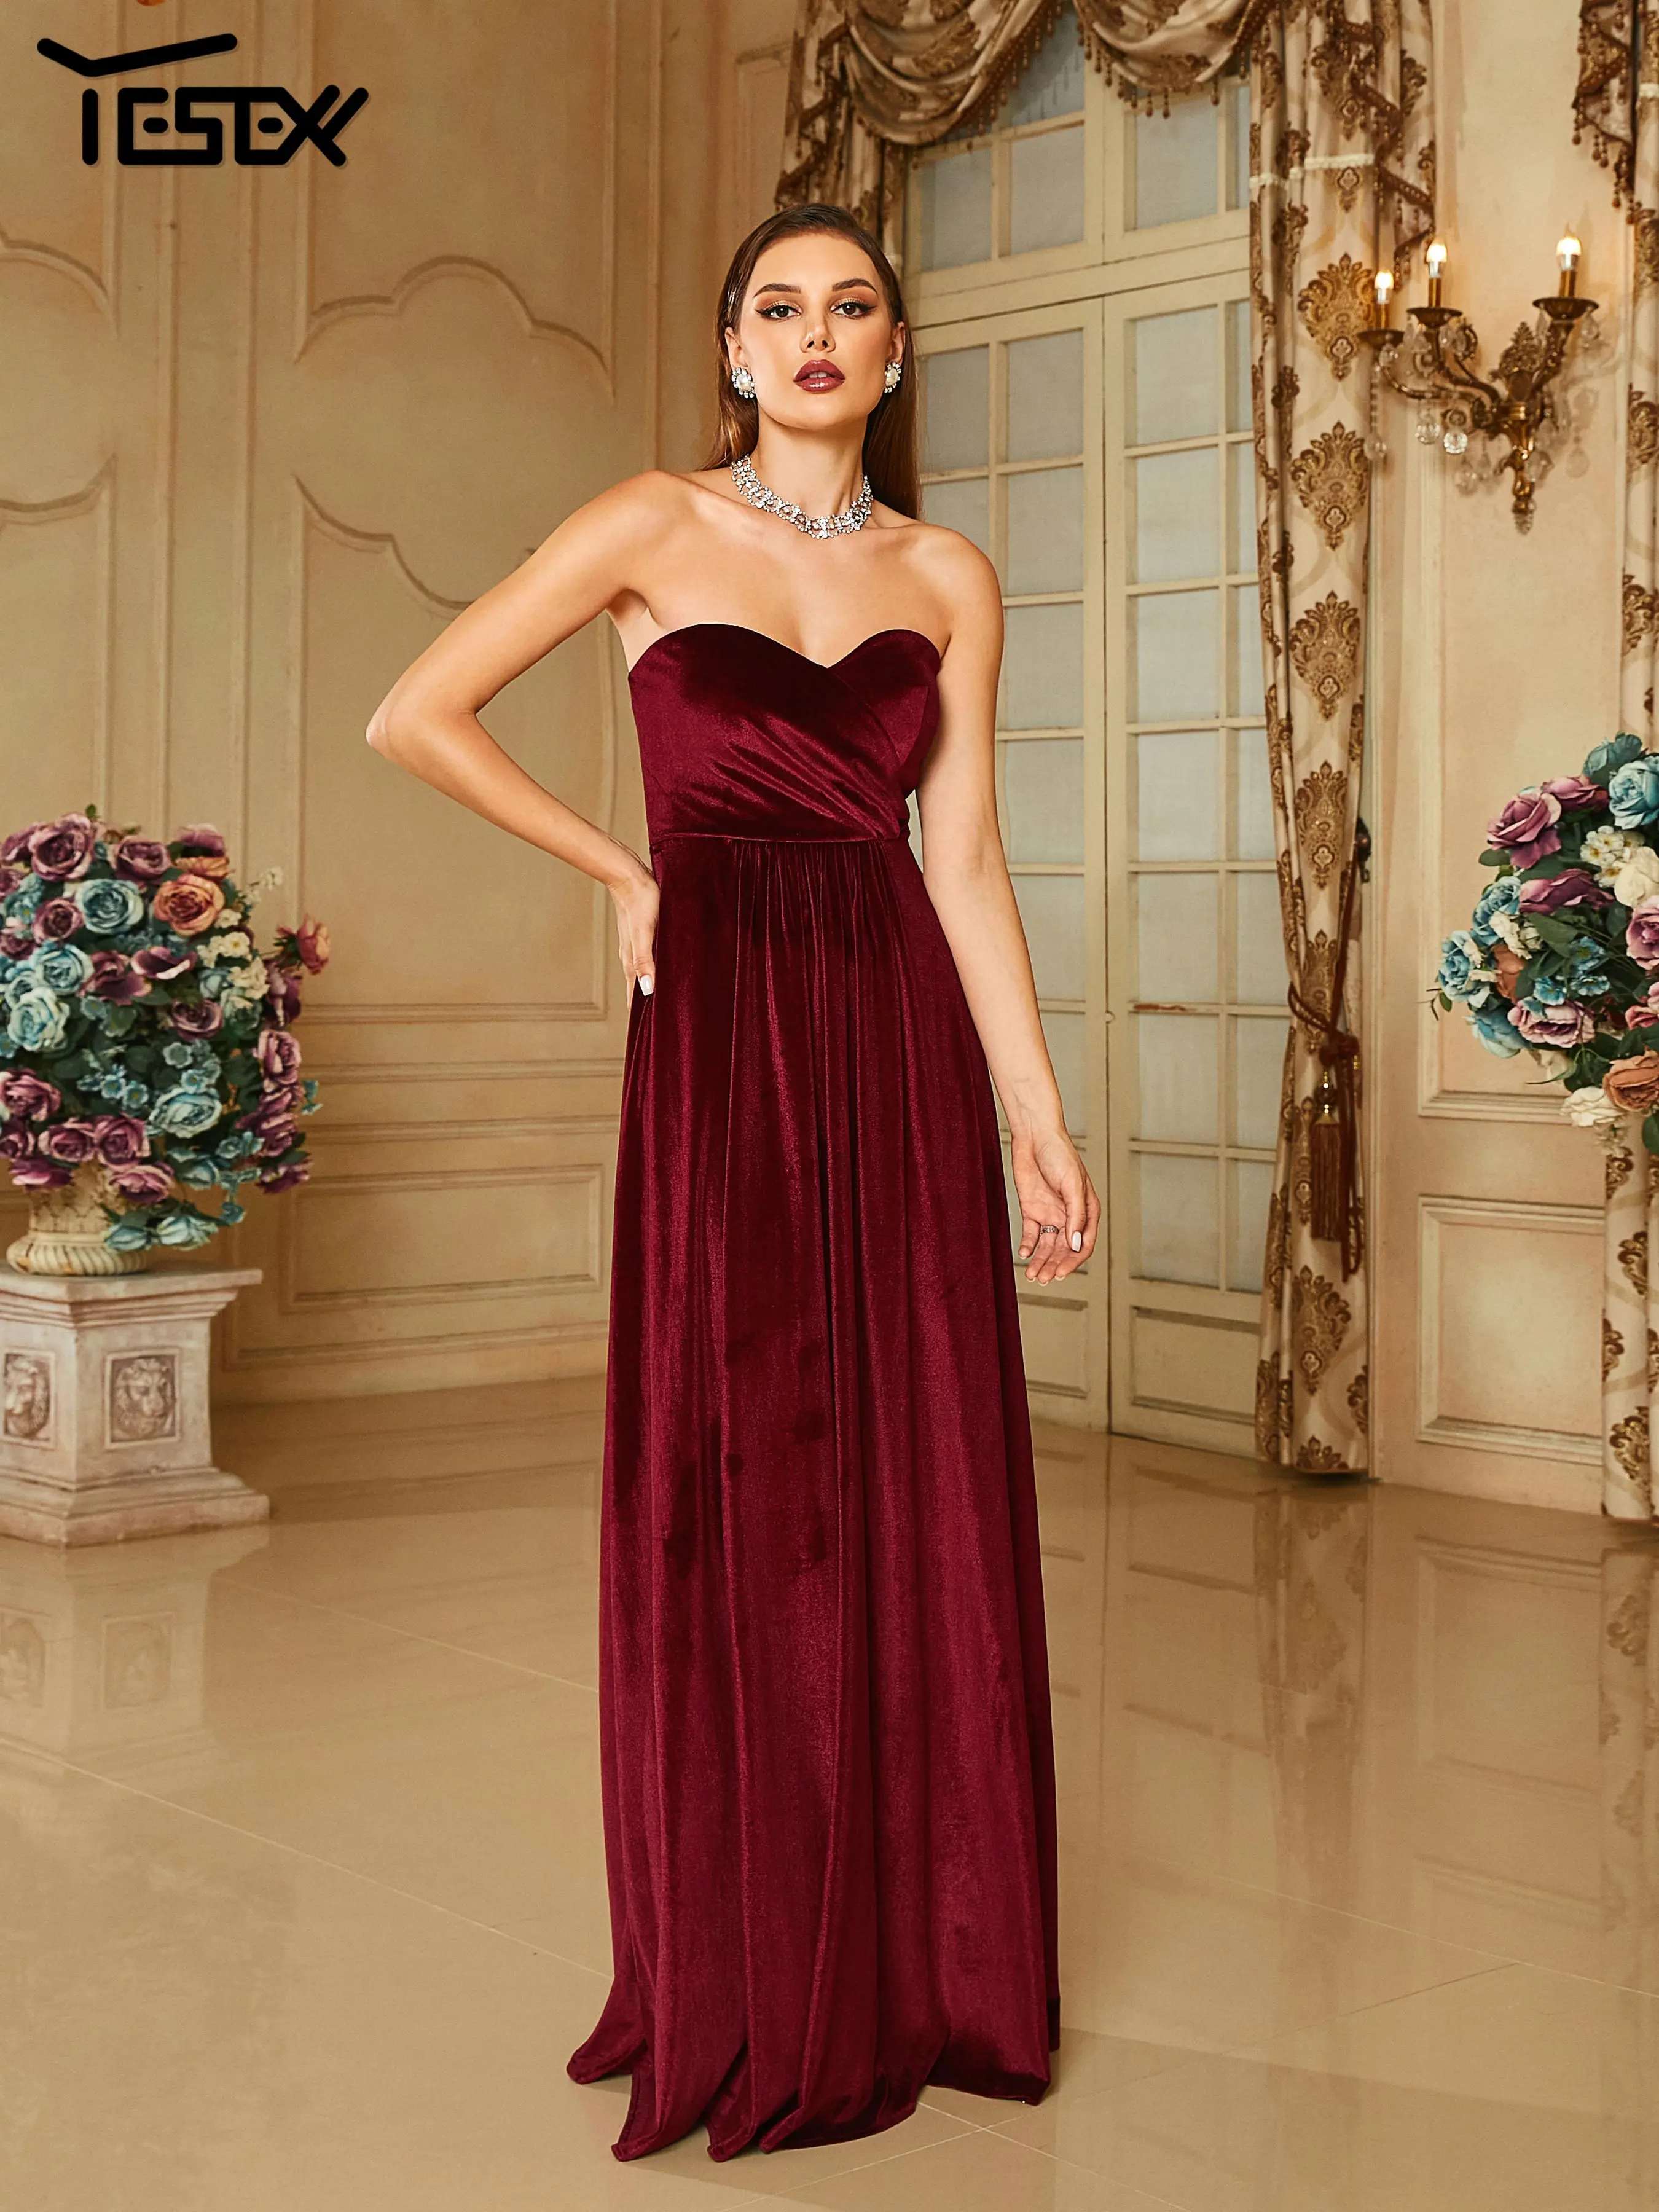 

Yesexy New Elegant Party Dresses For Women 2023 Formal Strapless A-Line Velvet Burgundy Ball Gown